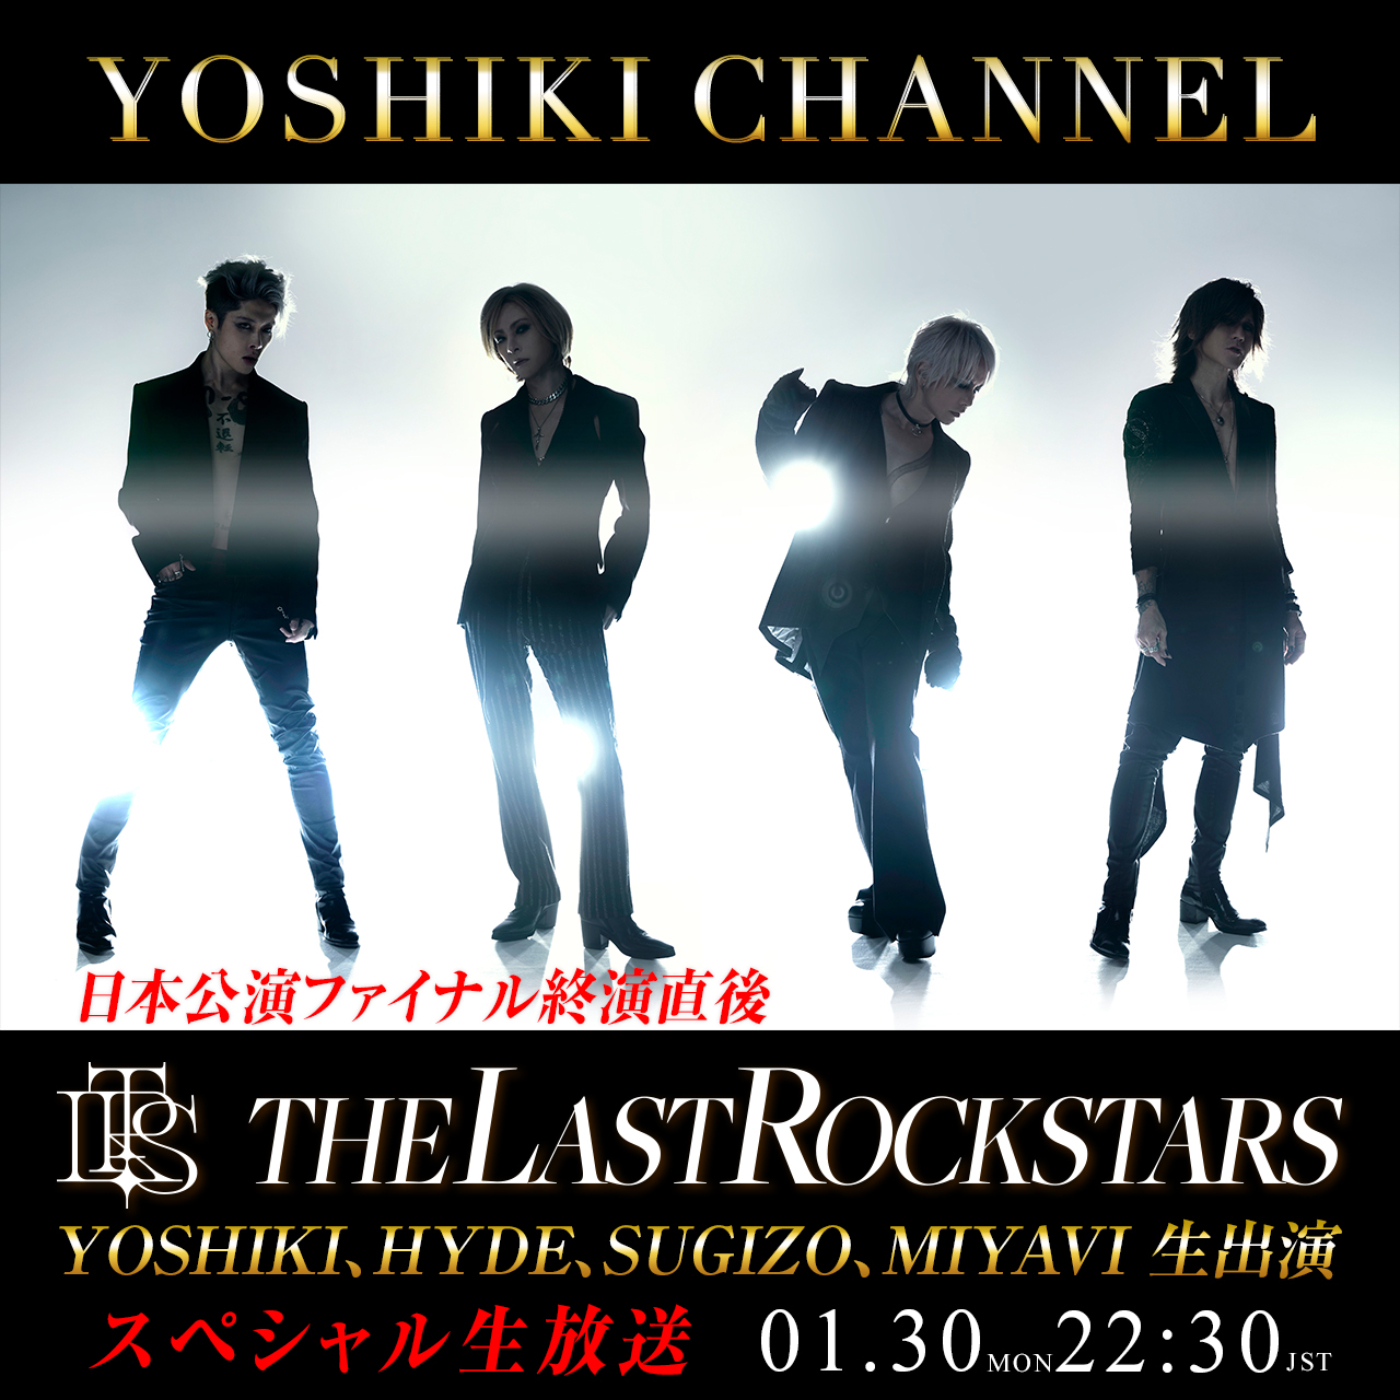 THE LAST ROCKSTARS、日本公演ファイナル終演直後に『YOSHIKI CHANNEL』生出演決定 - 画像一覧（1/1）